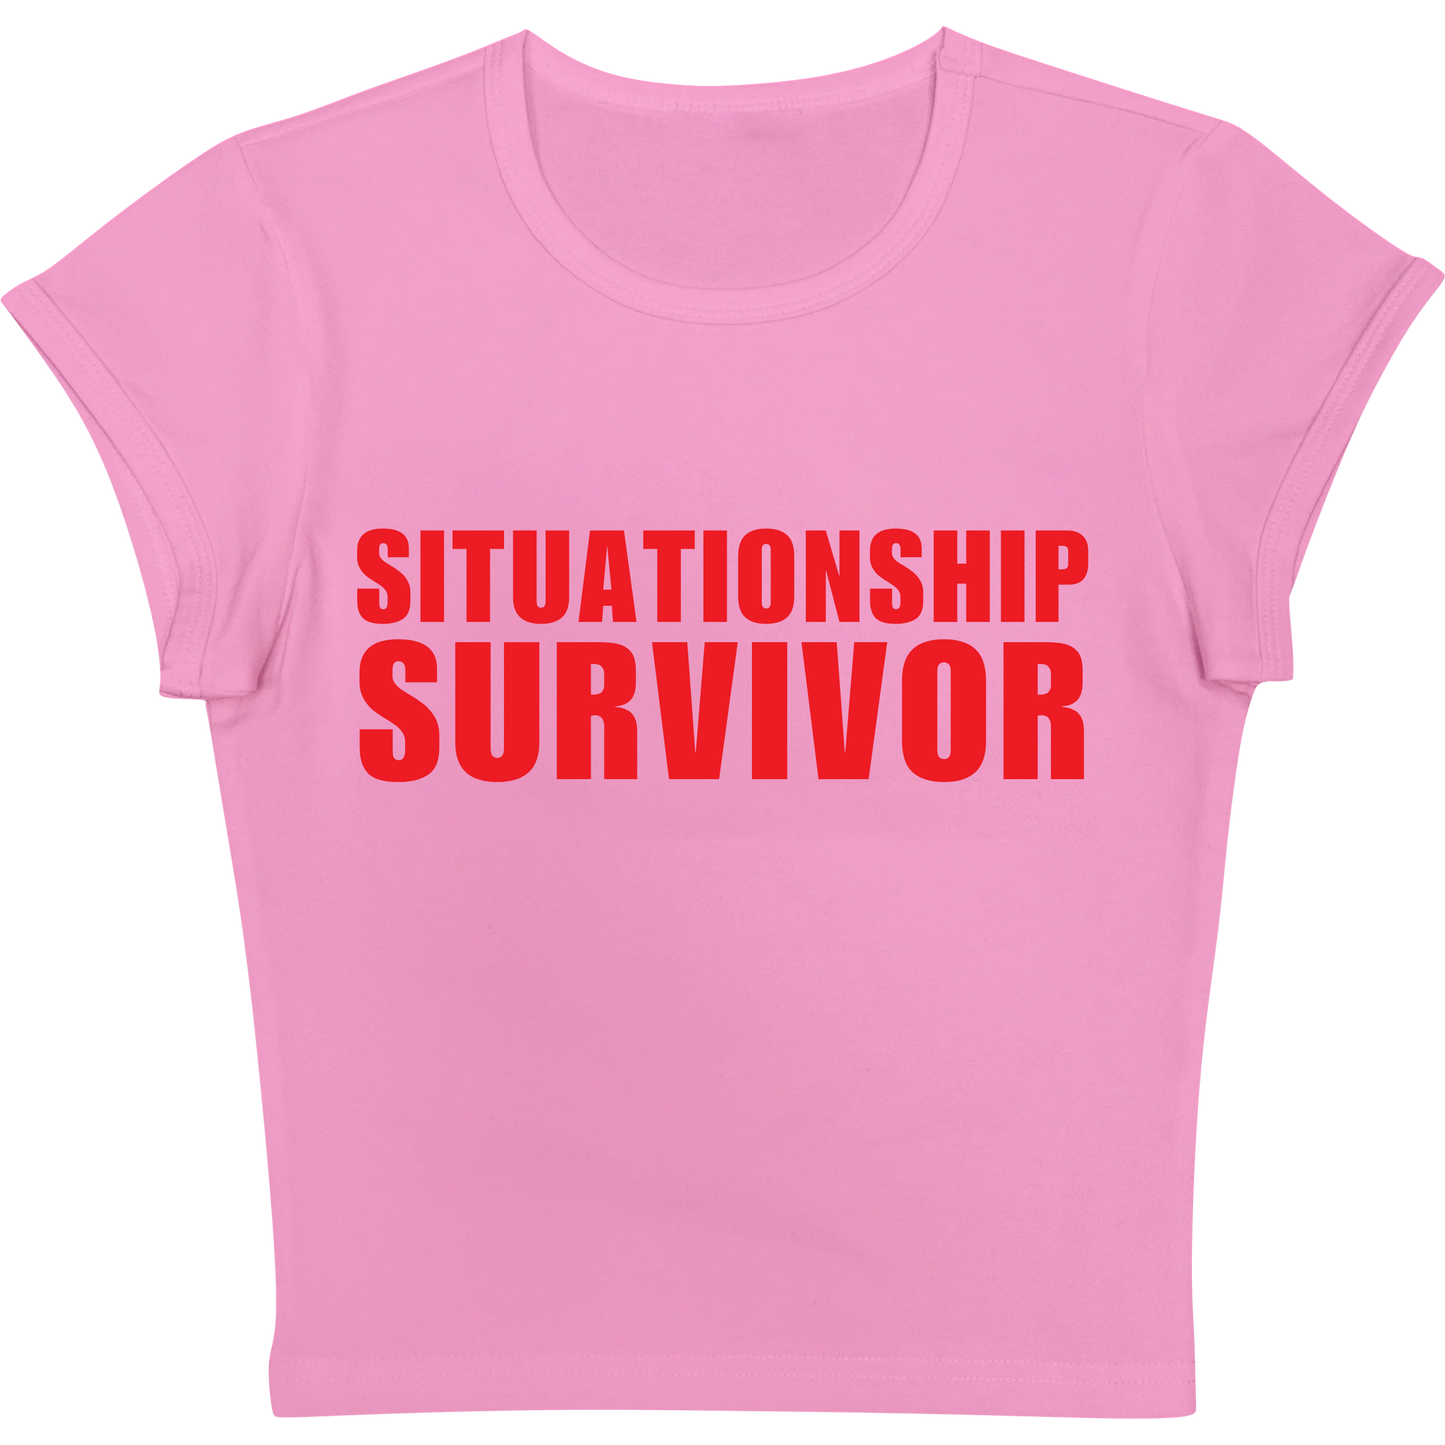 Situationship Survivor Pink Baby tee